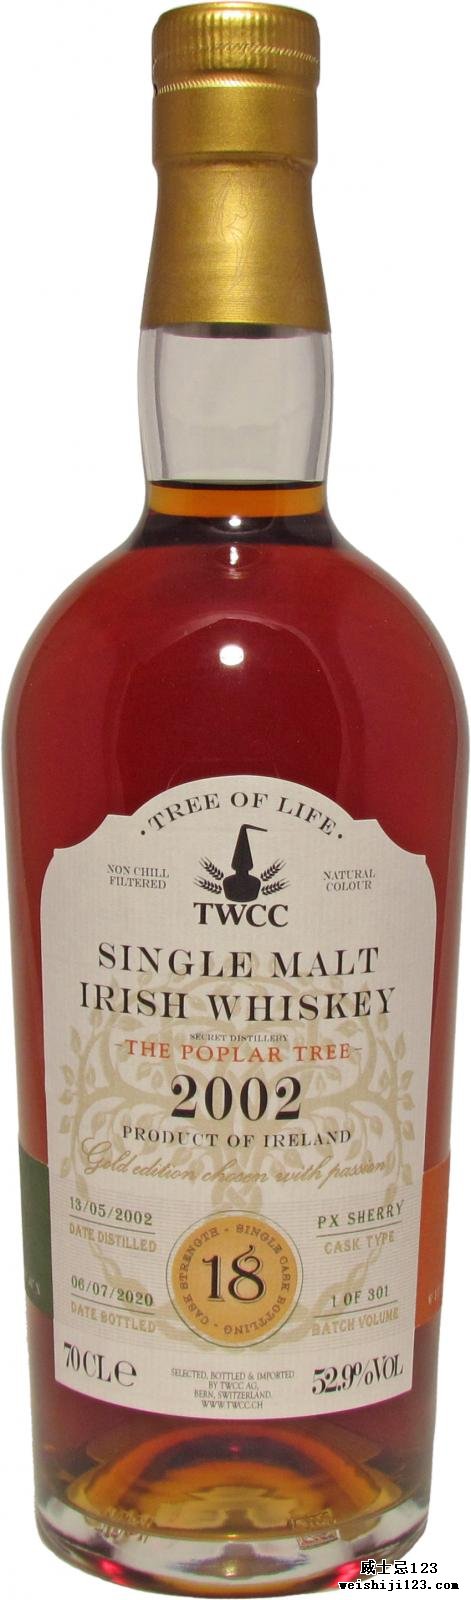 Single Malt Irish Whiskey 2002 - The Poplar Tree TWCC